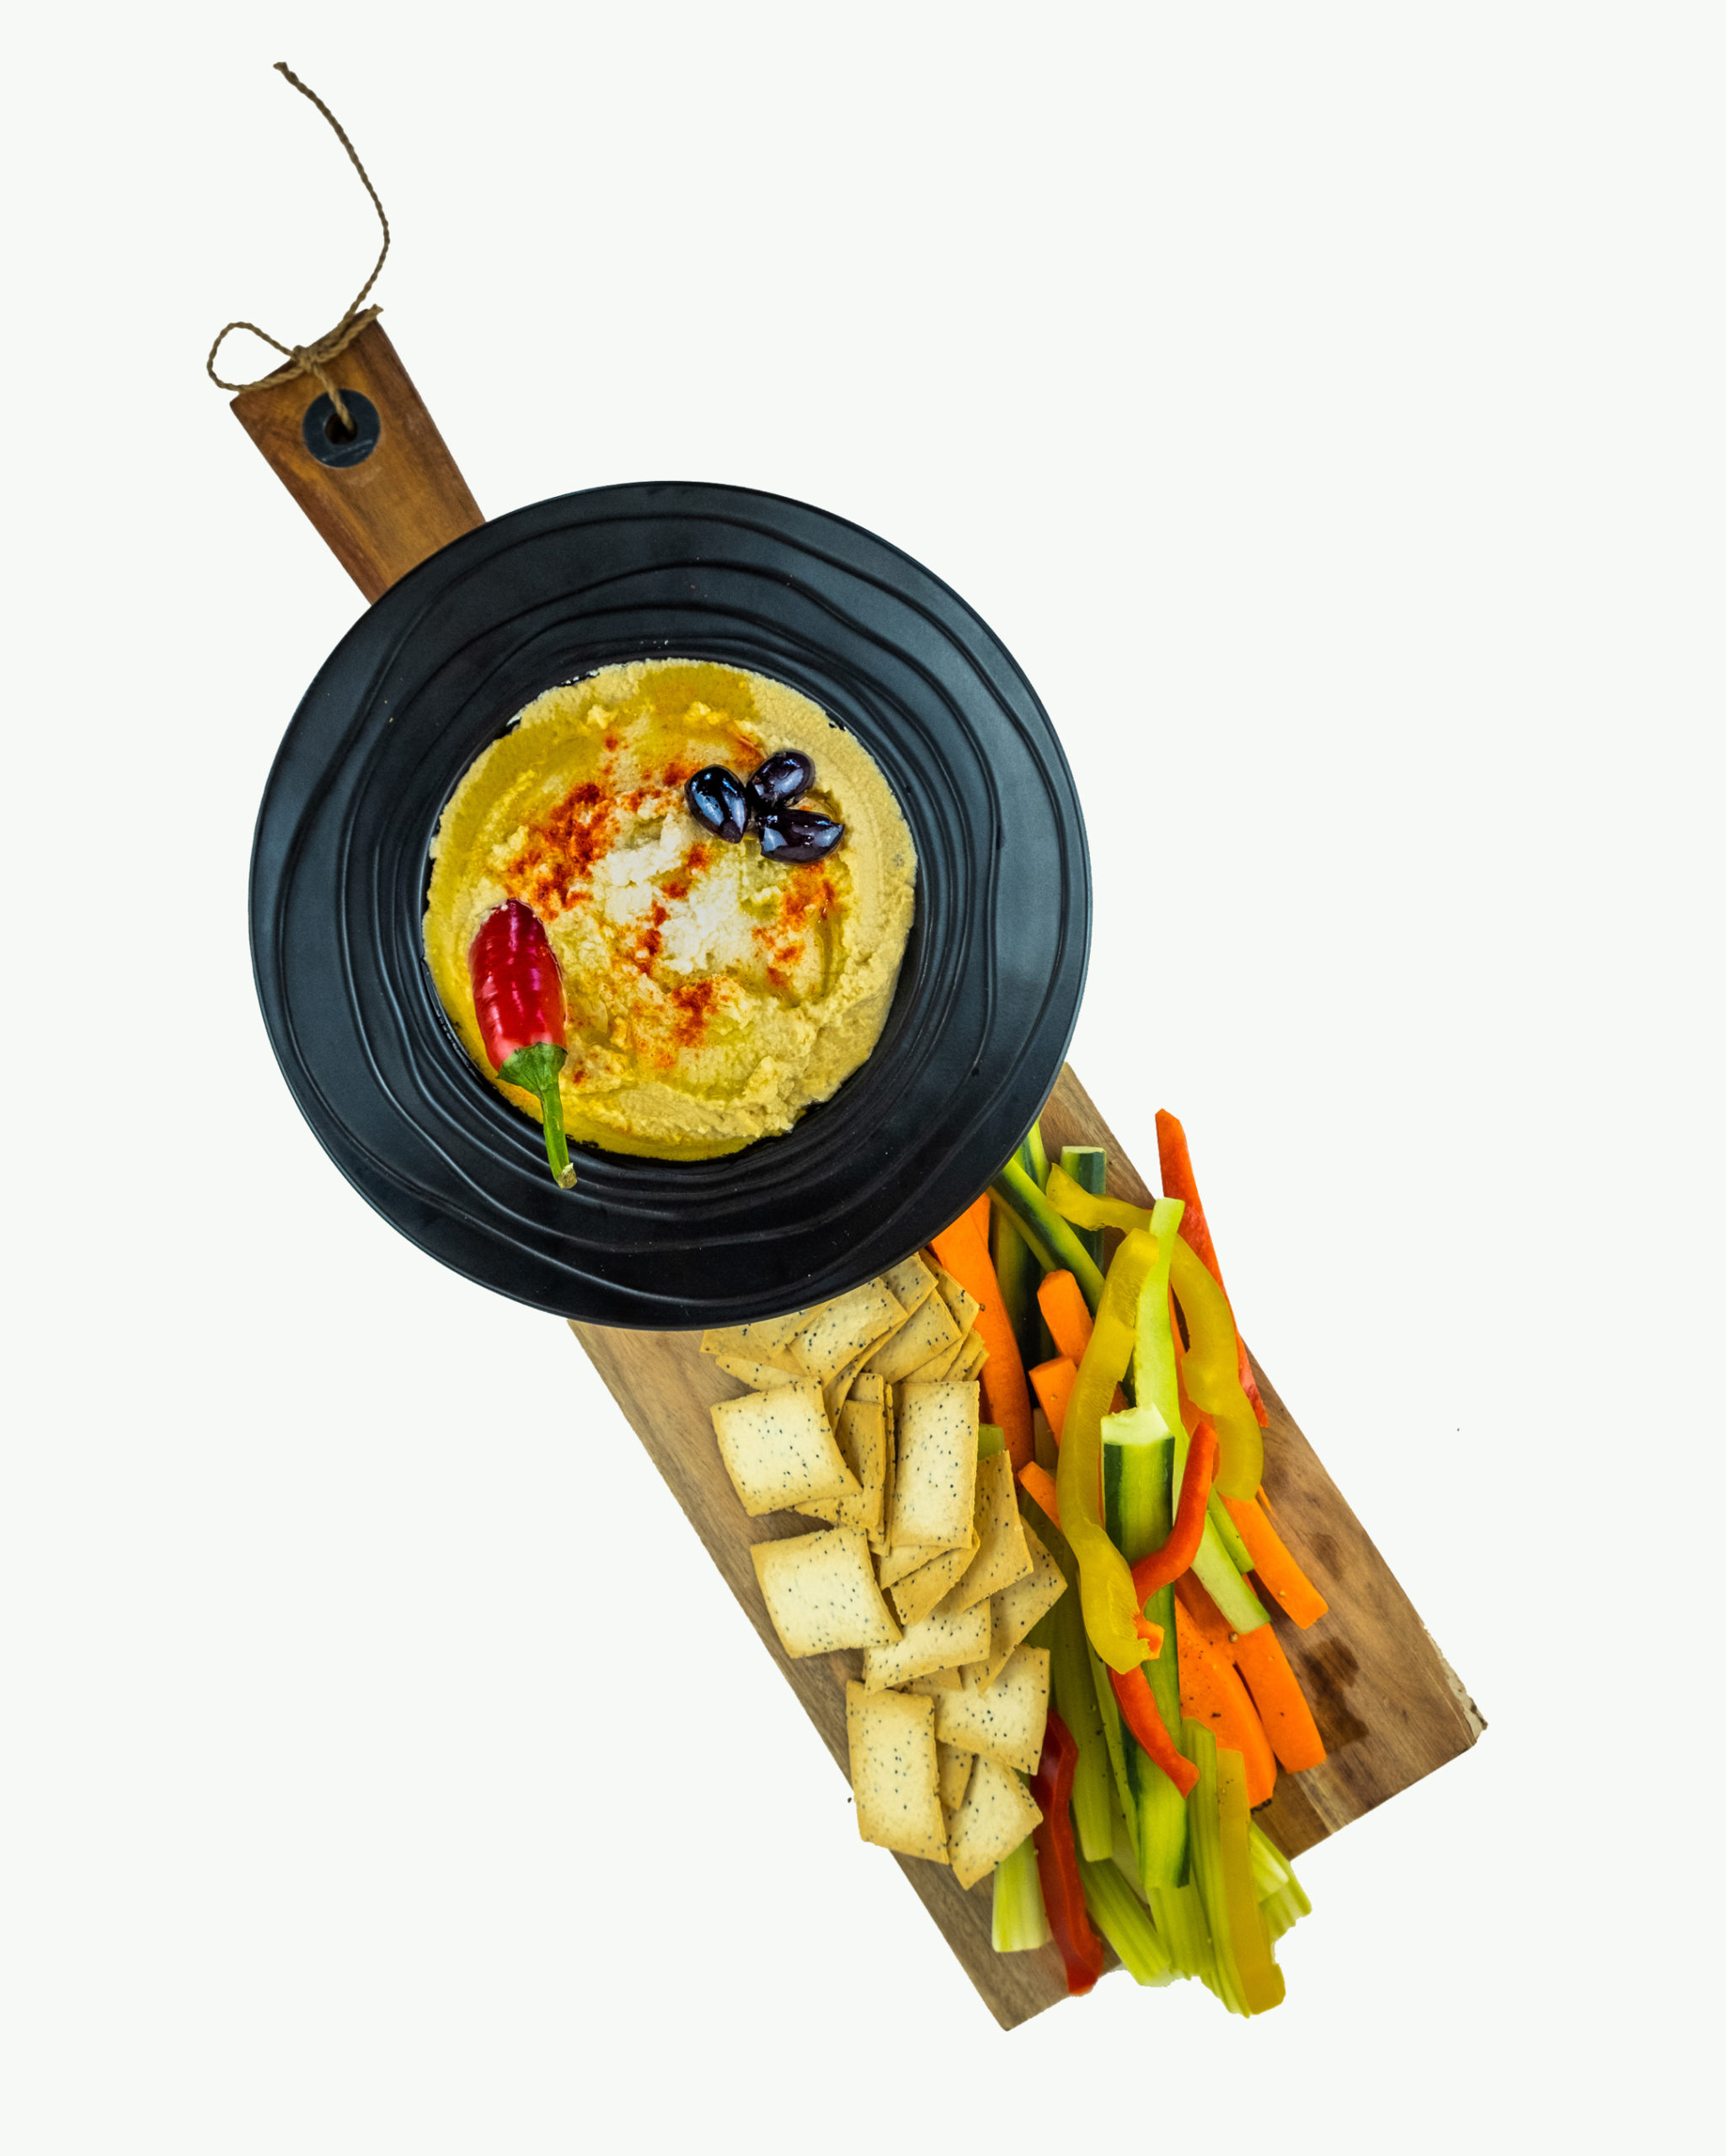 Hummus Dip With Veggie Sticks and Crackers